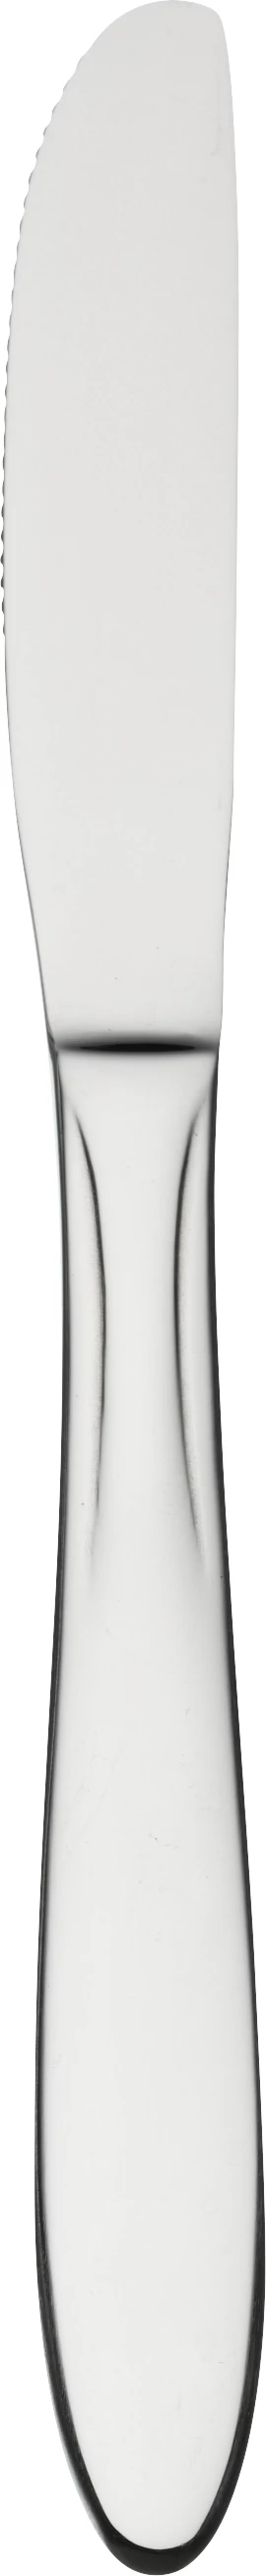 Arabella bordkniv, 21 cm